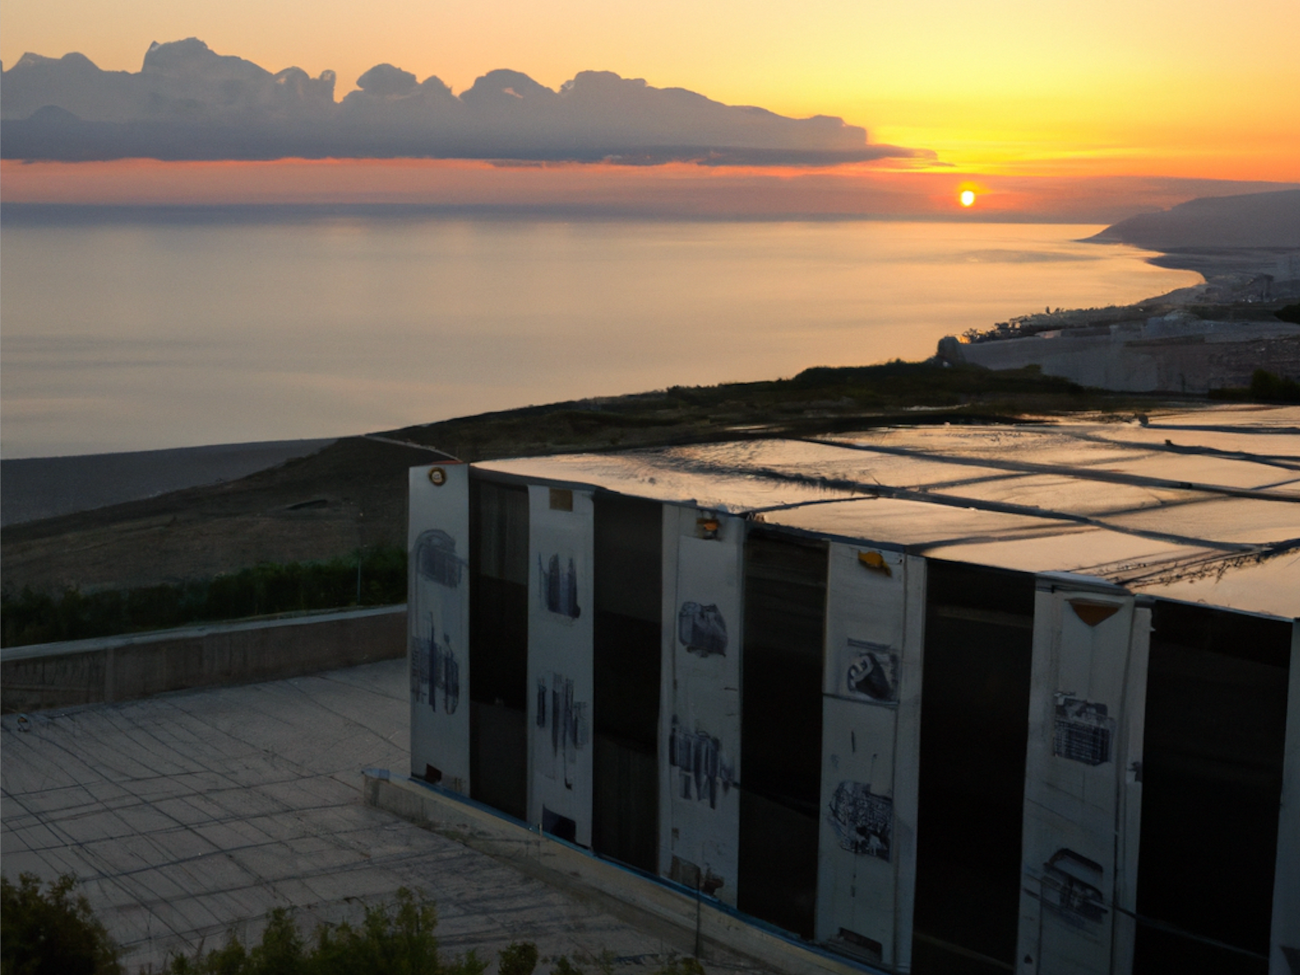 “An Internet Web Archive with its data center over the mediterranean sea at sun rise” Licence CC0 générée avec DALL-E2 le 3 février 2023